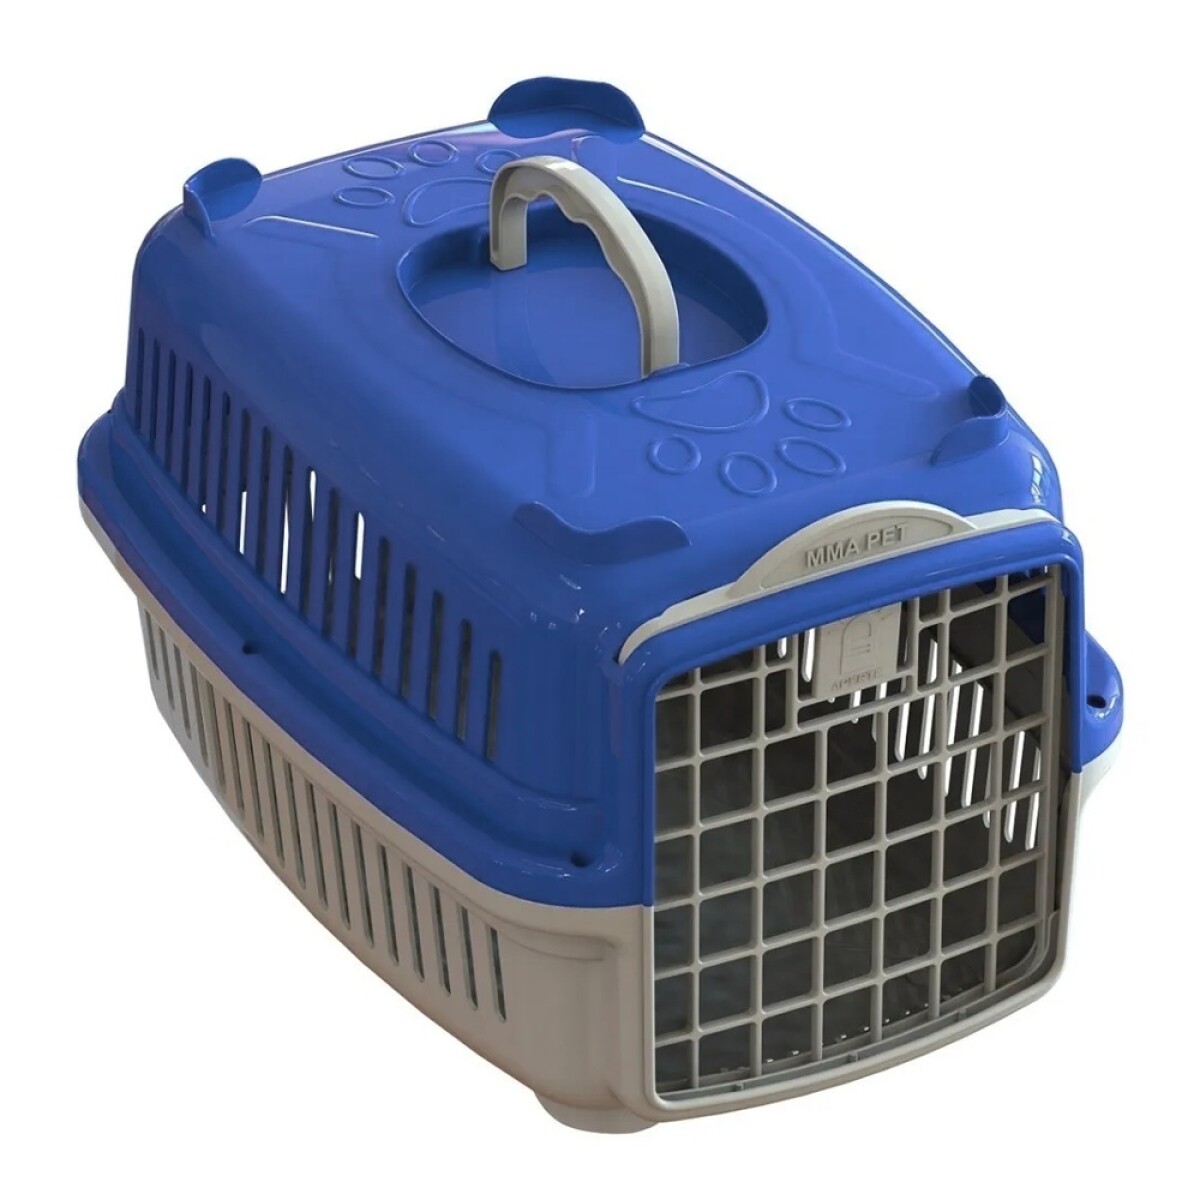 Transportadora Plástica Rígida Mascotas Pequeñas MMA PET N°1 - Azul 